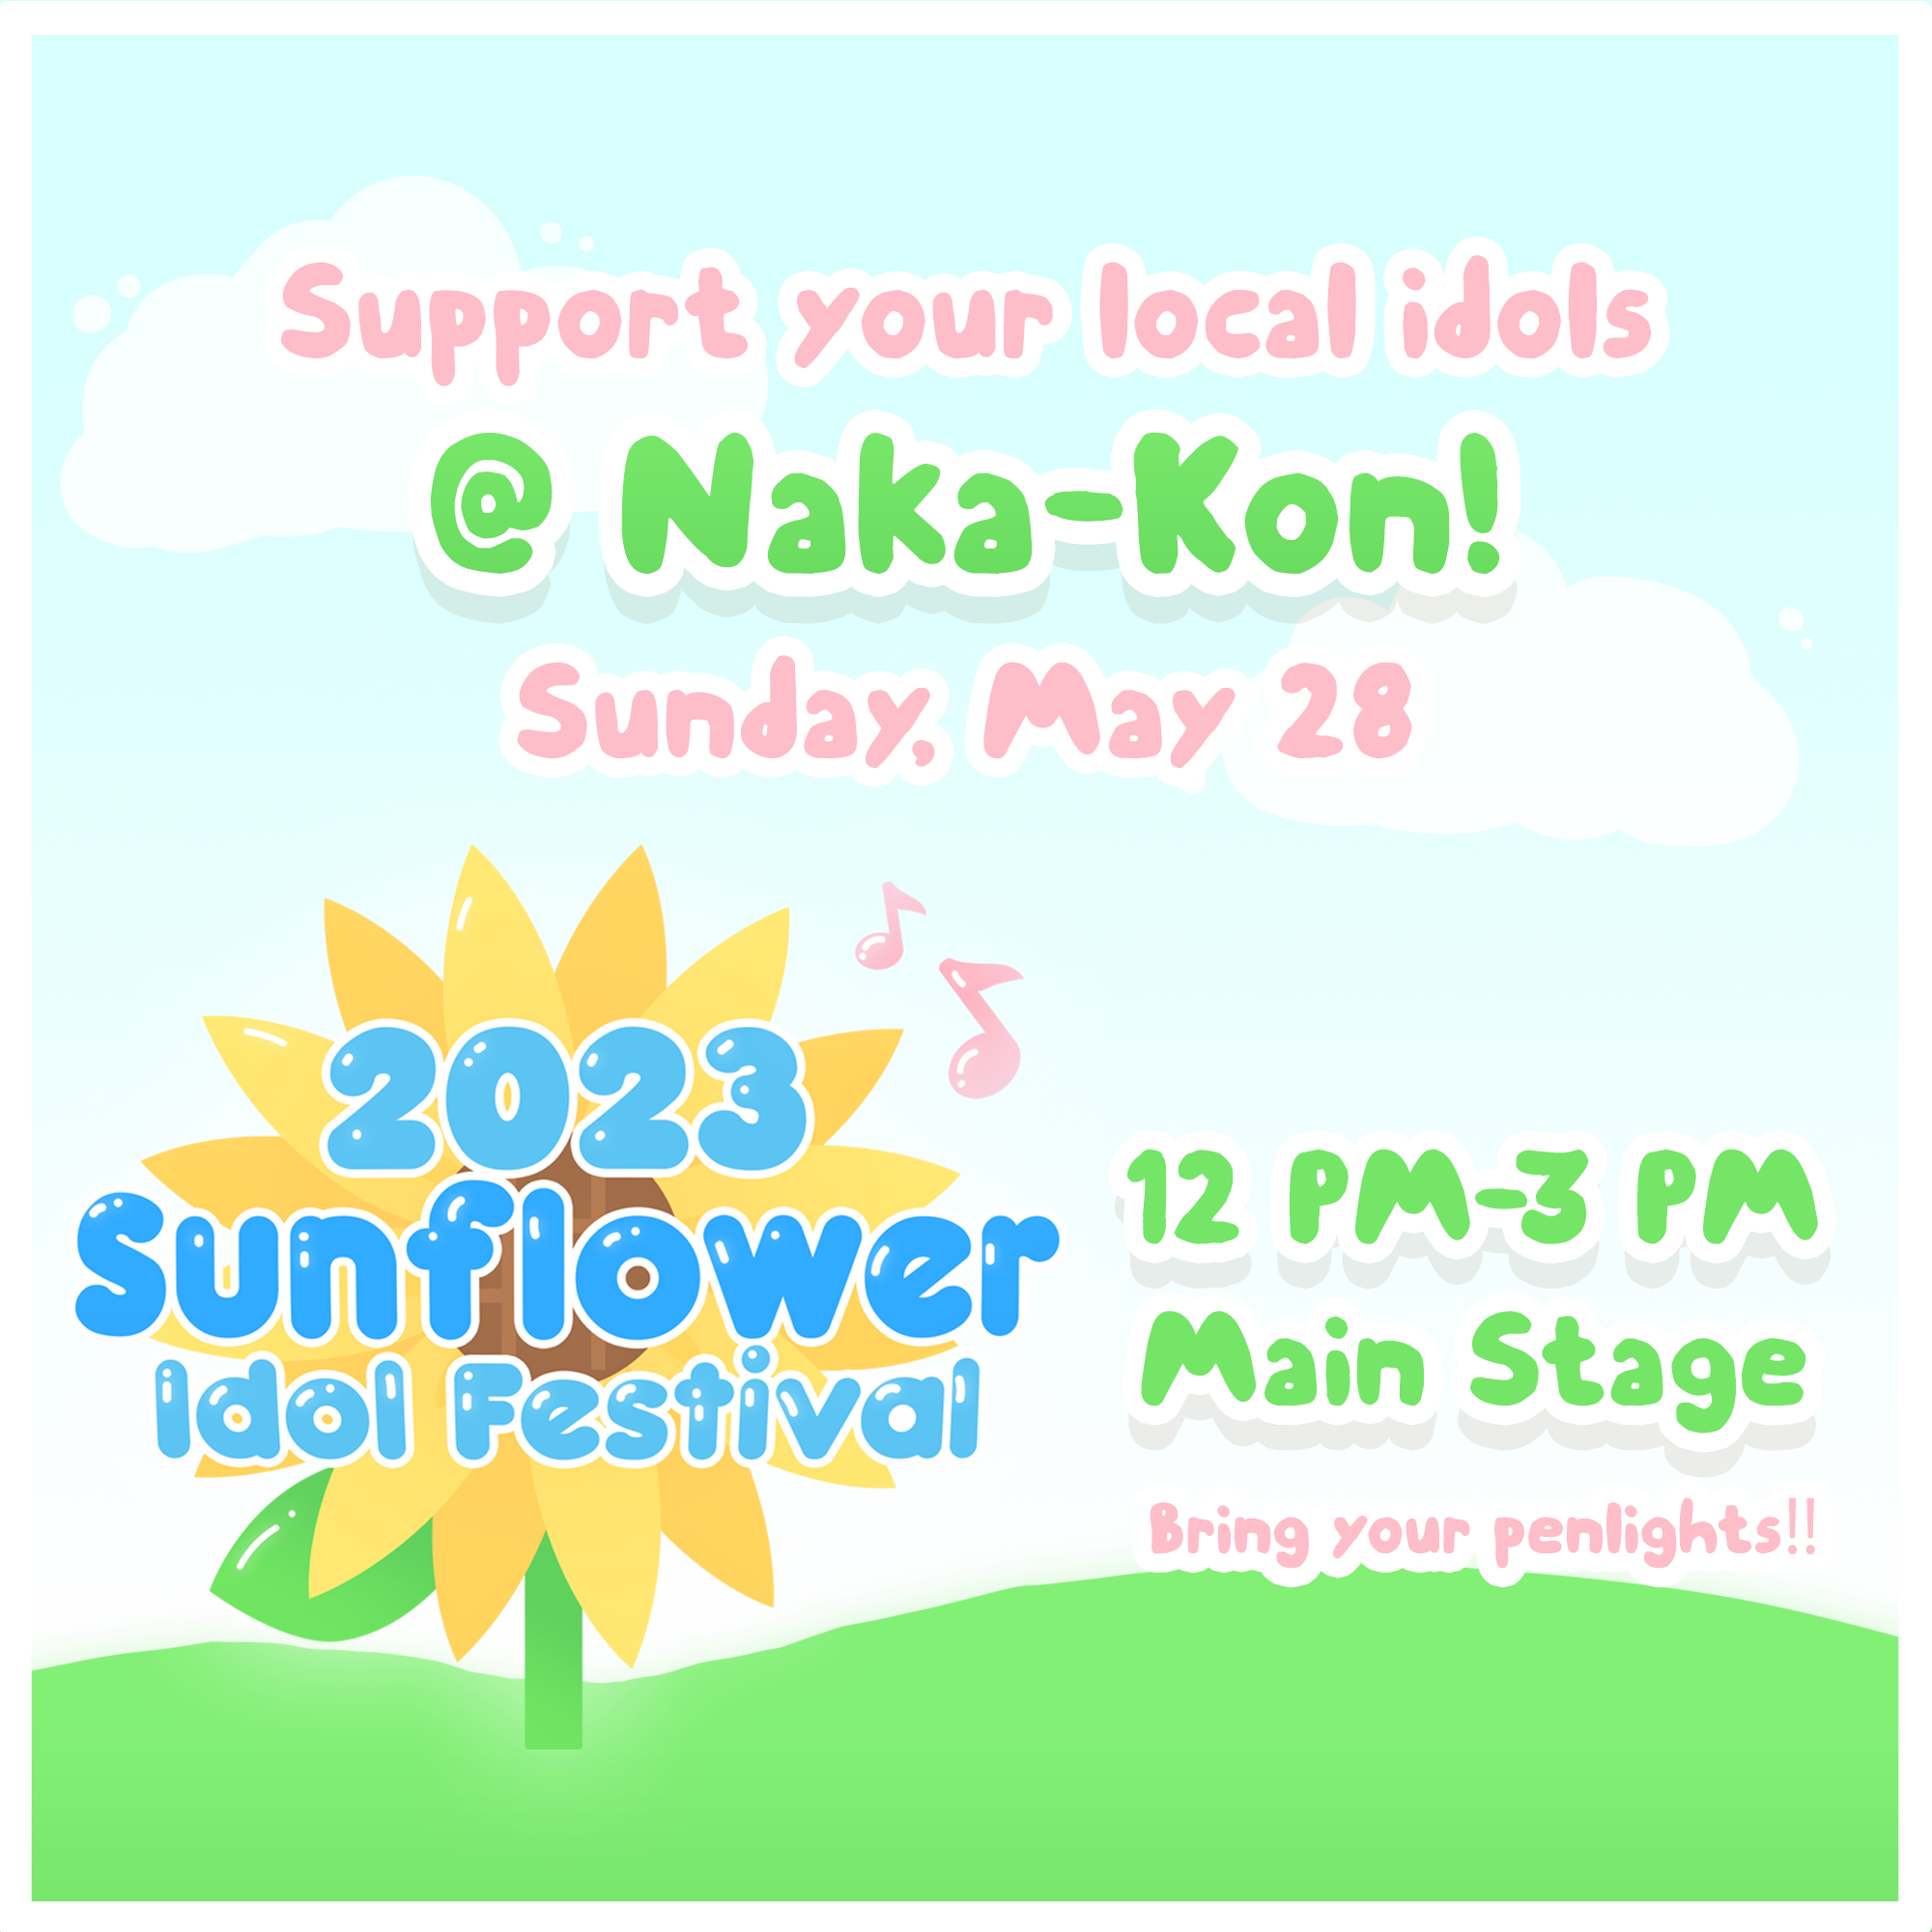 Sunflower Idol Fest